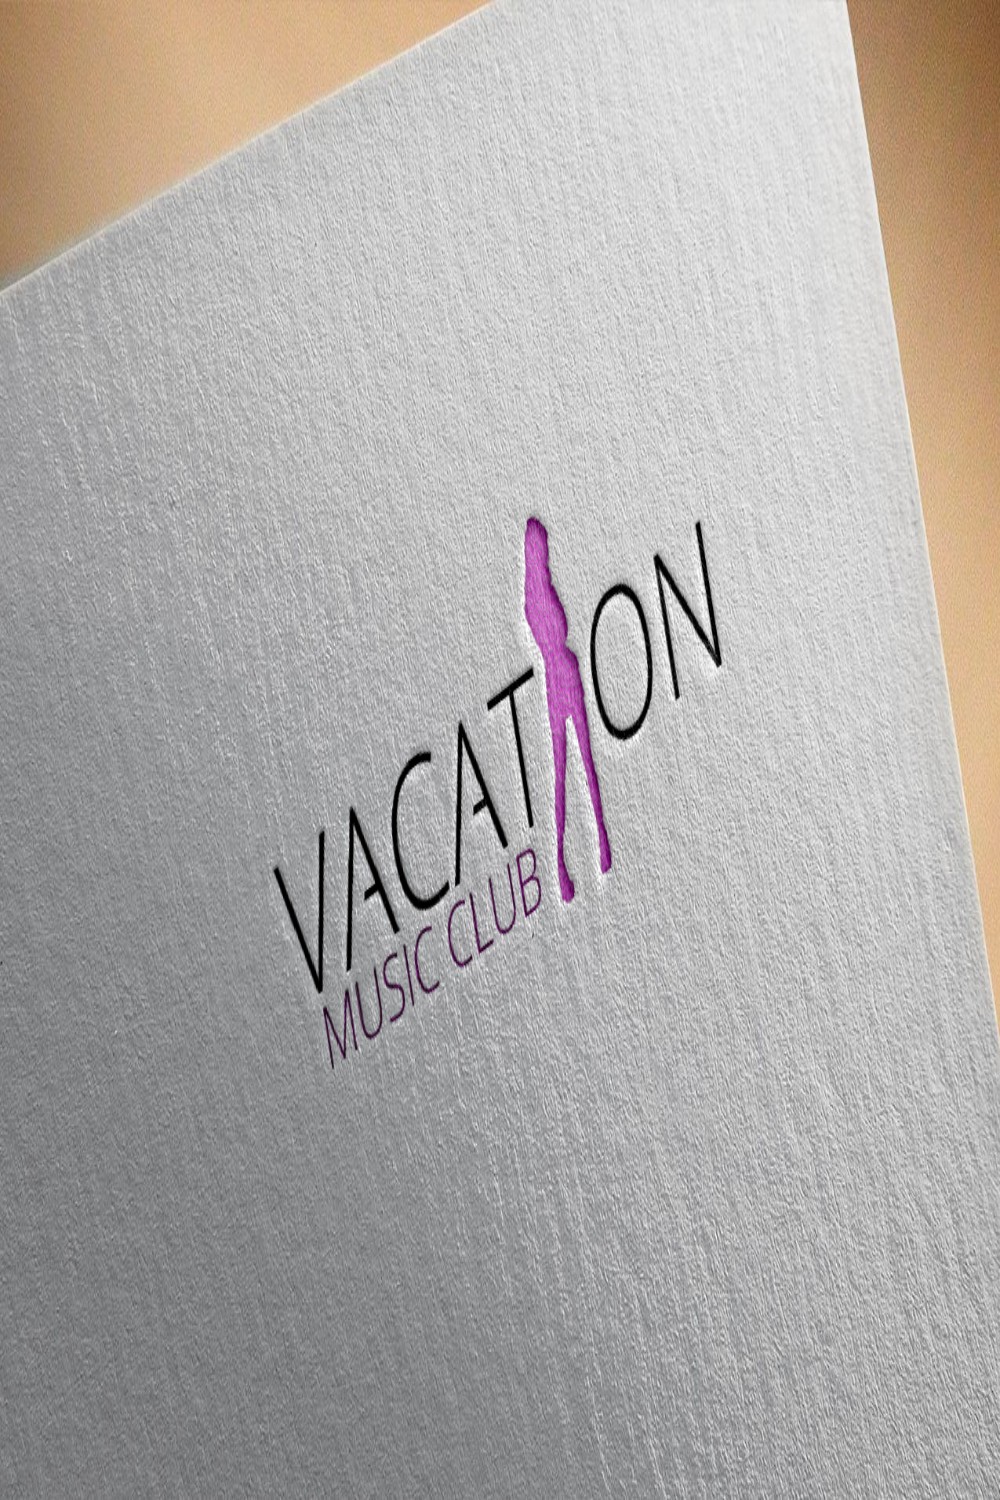 Vacation Music Club Logo Design pinterest image.